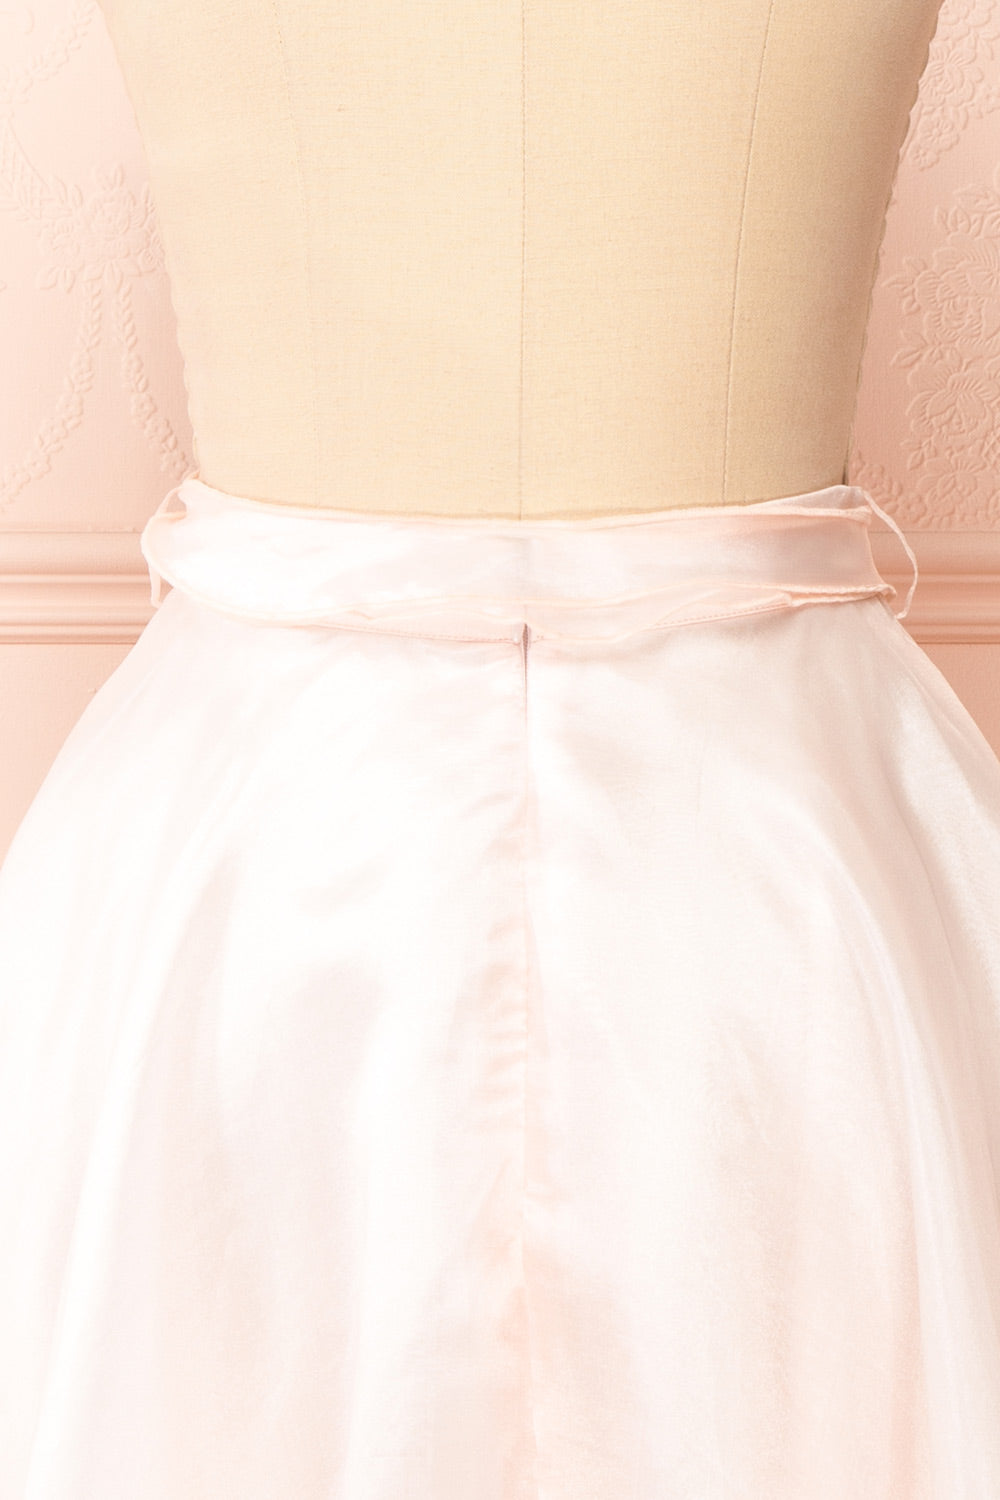 Pearla Short Pink Skirt w/ Flounce Belt | Boutique 1861 back close-up